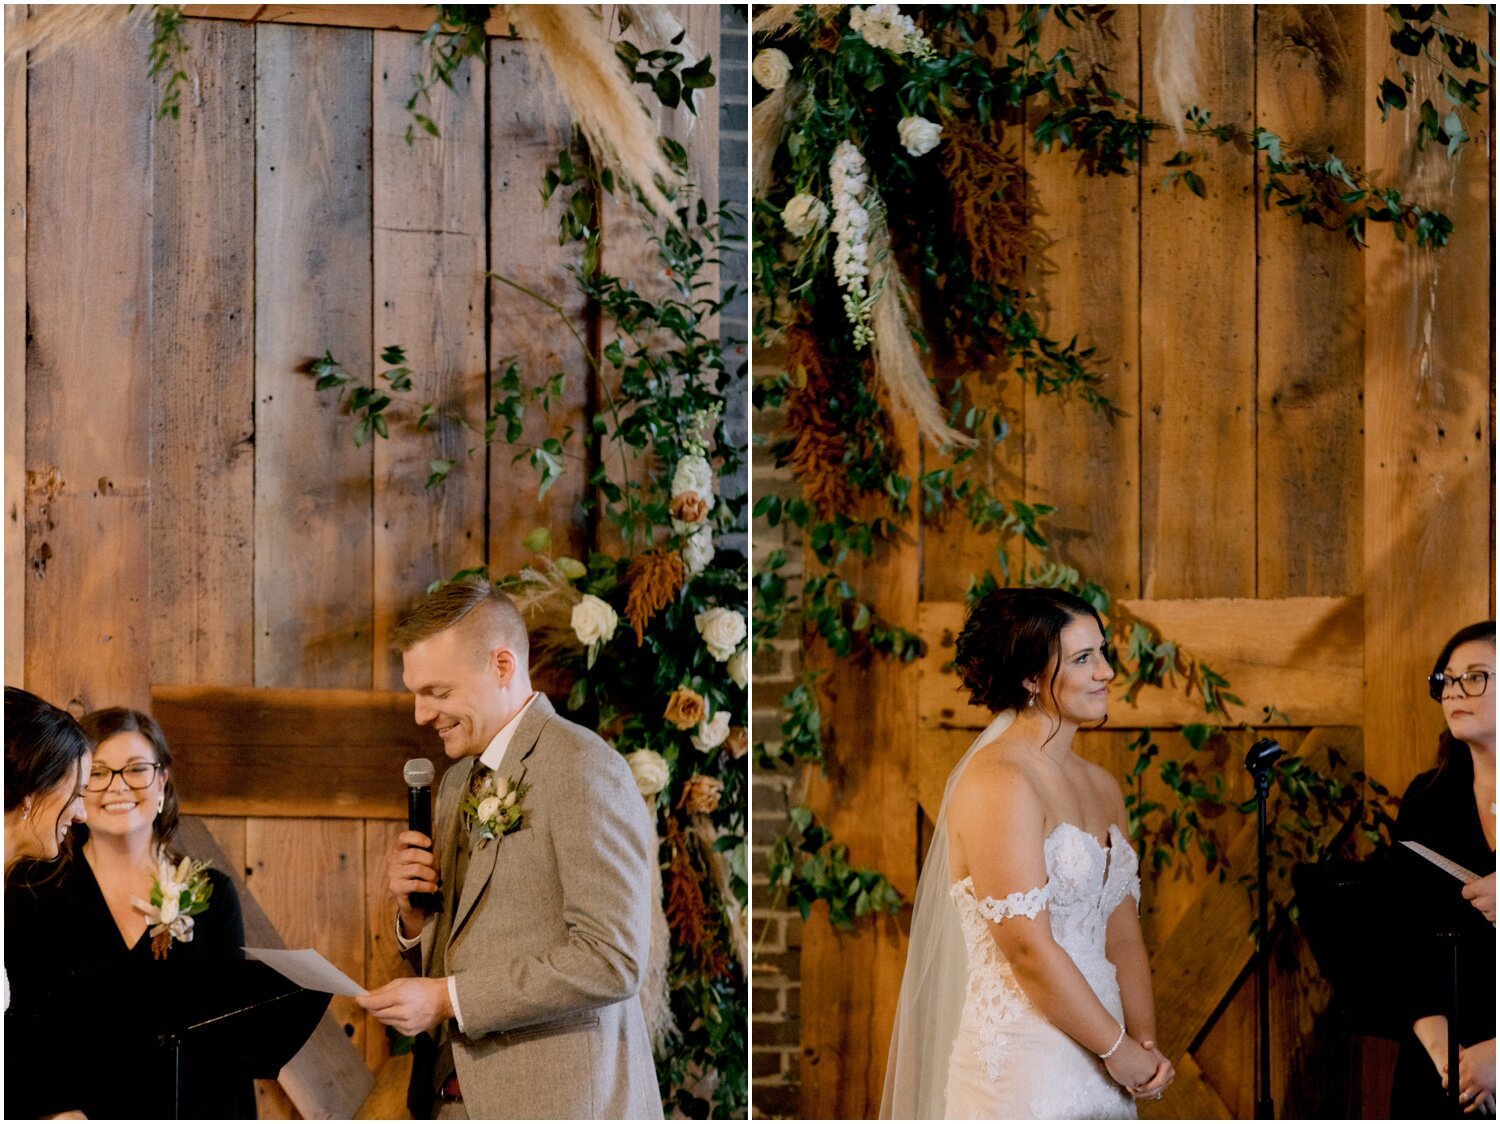 Andrew Ferren Photography - Des Moines Iowa Wedding Photographer - Destination - Engagement - Videography - Videographer - The River Center39.jpg